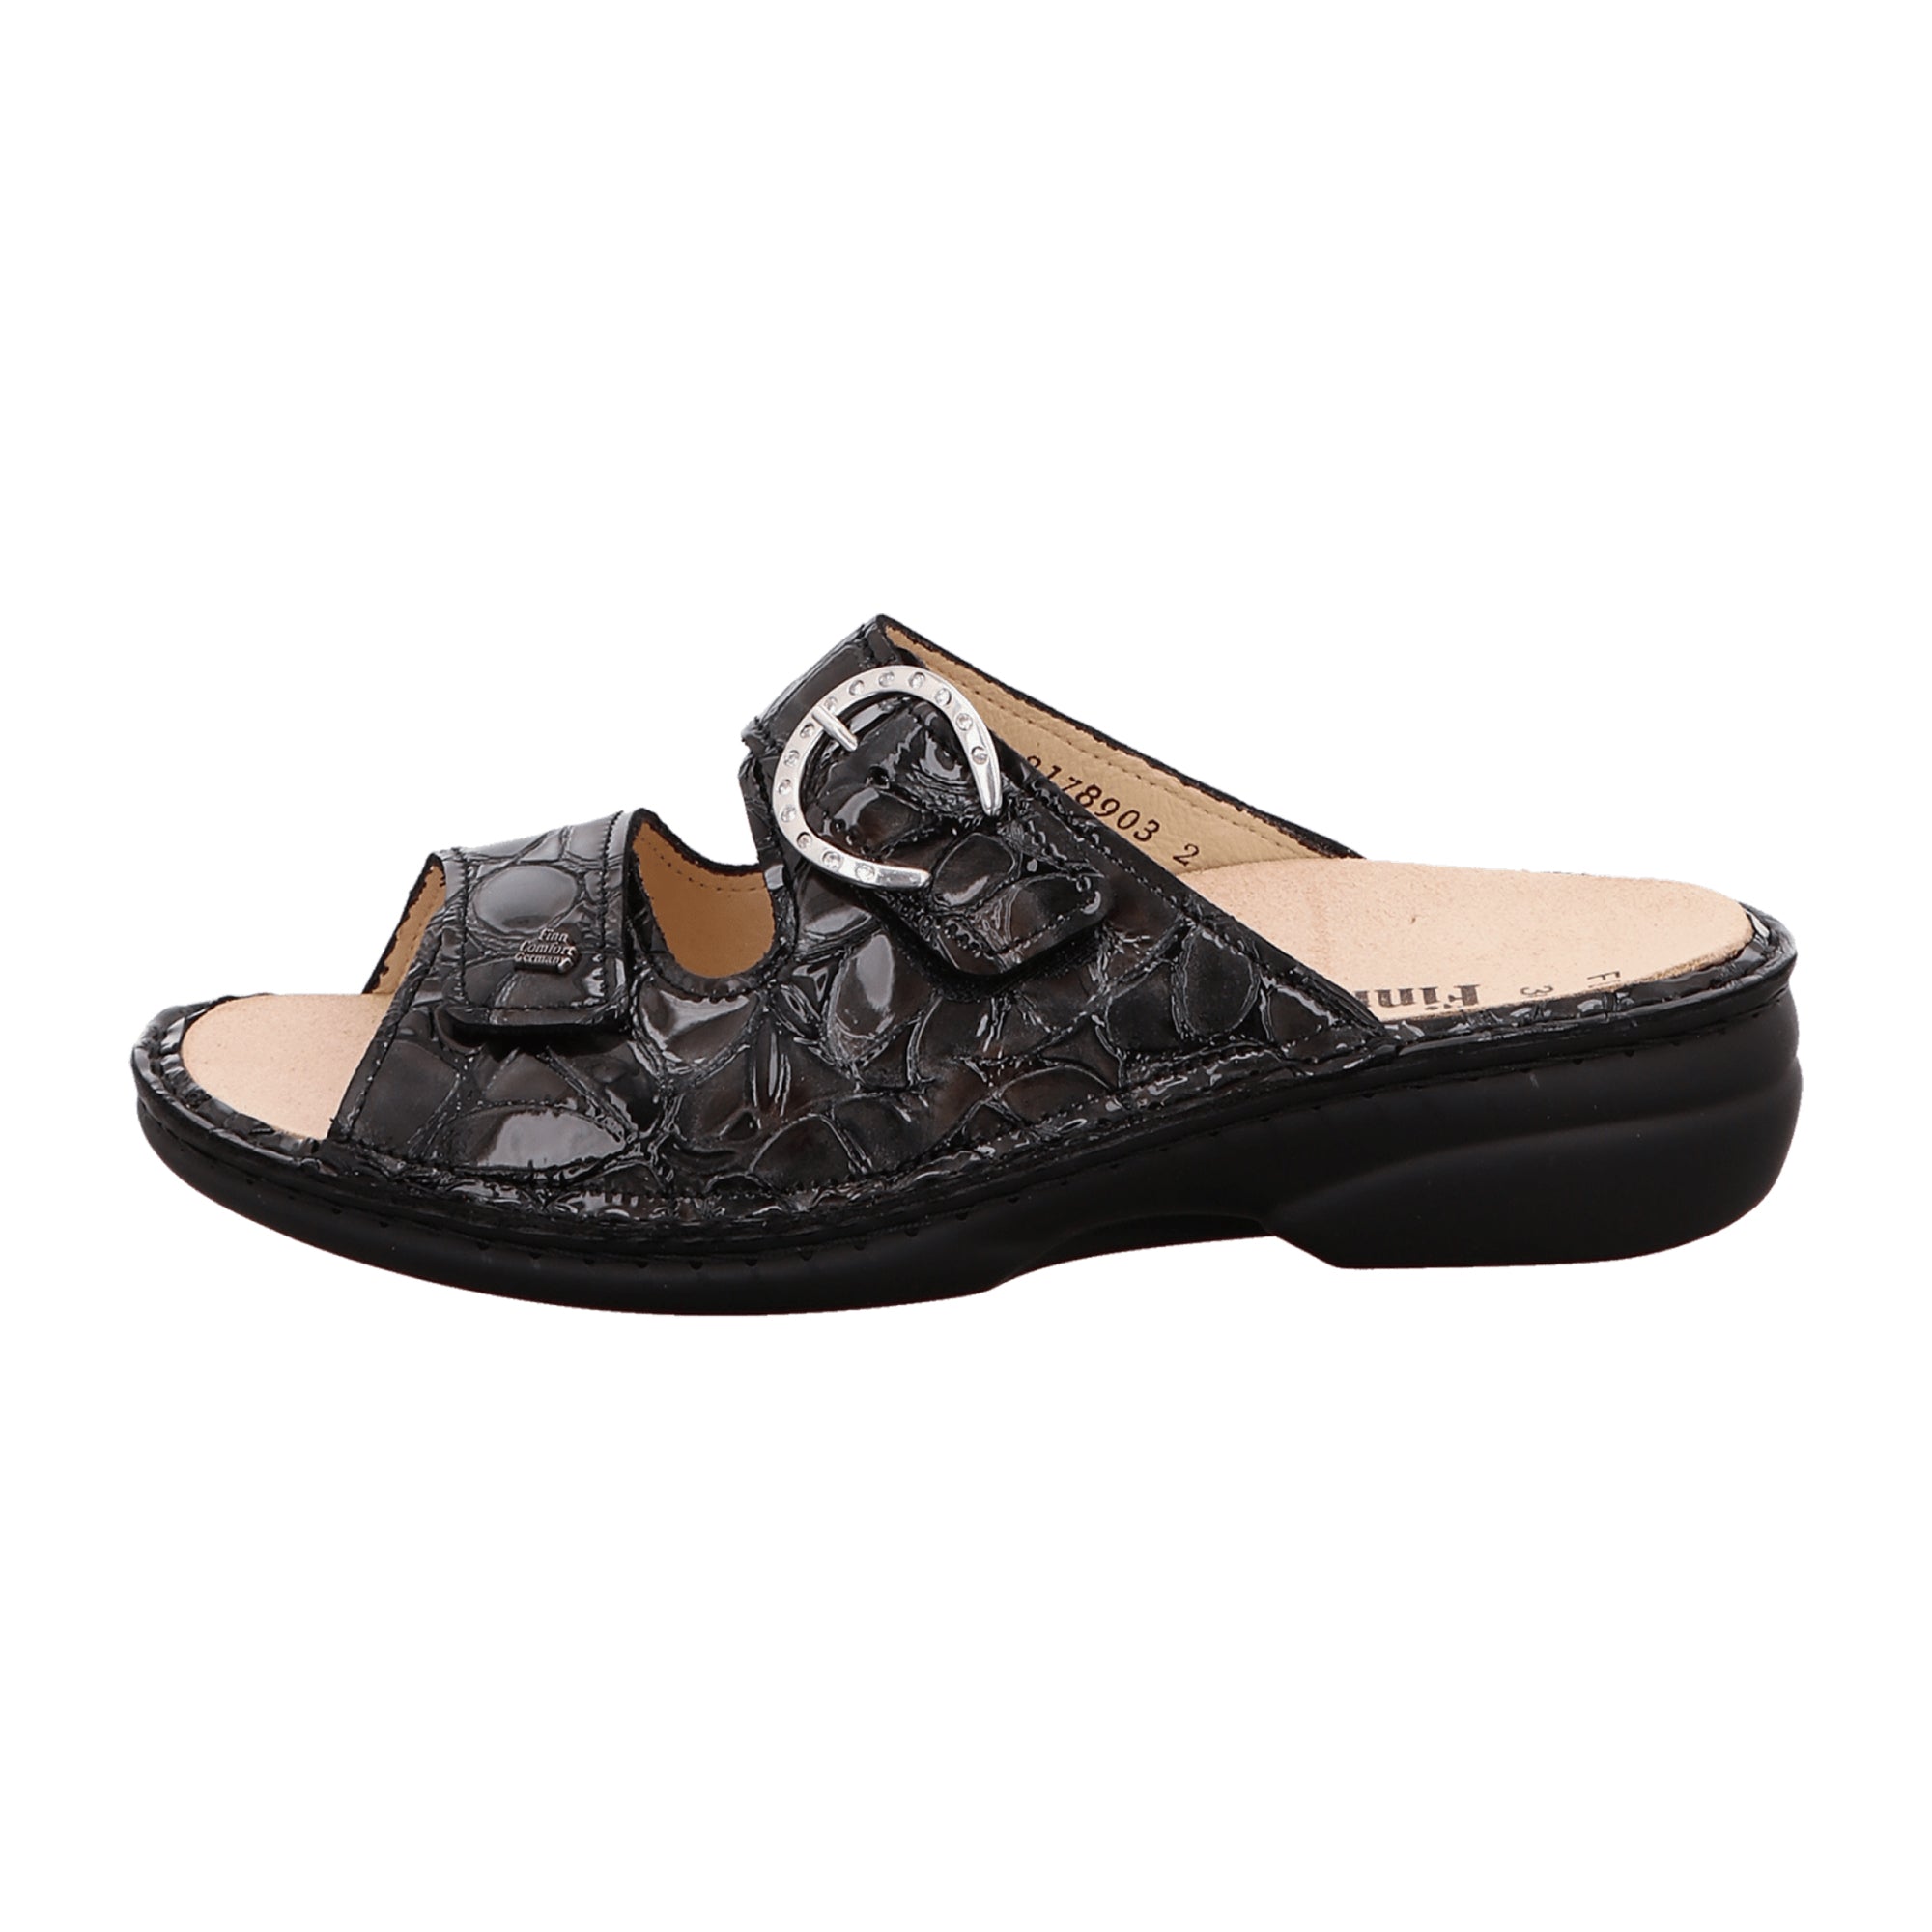 Finn Comfort Mumbai Women's Comfort Sandals - Durable and Stylish Black